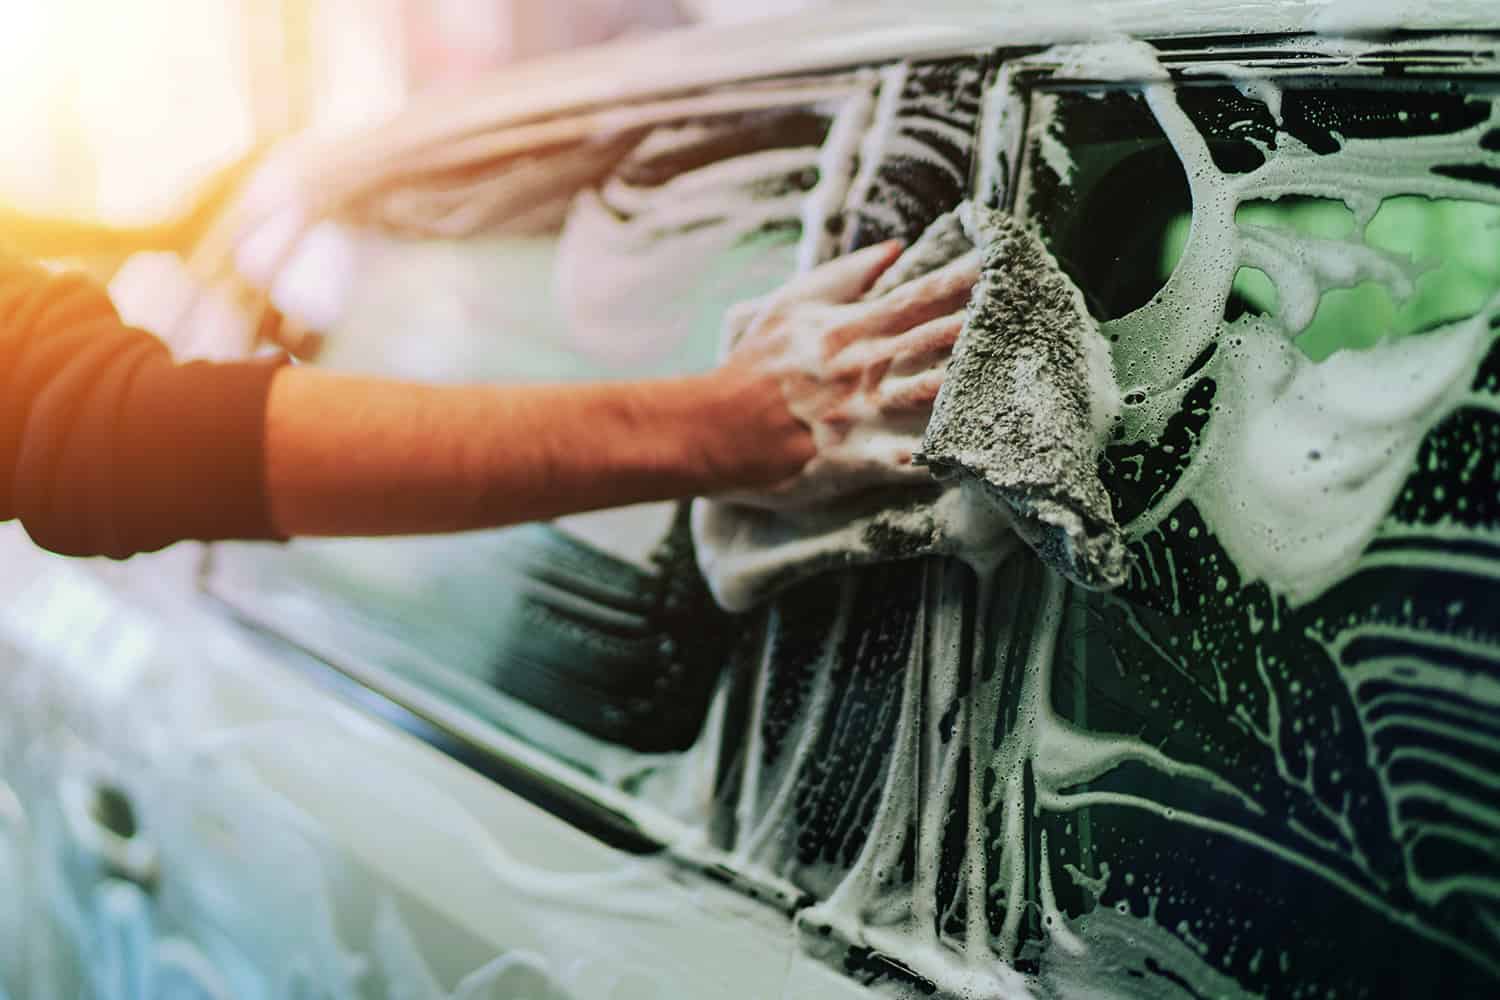 Hands washing a car.